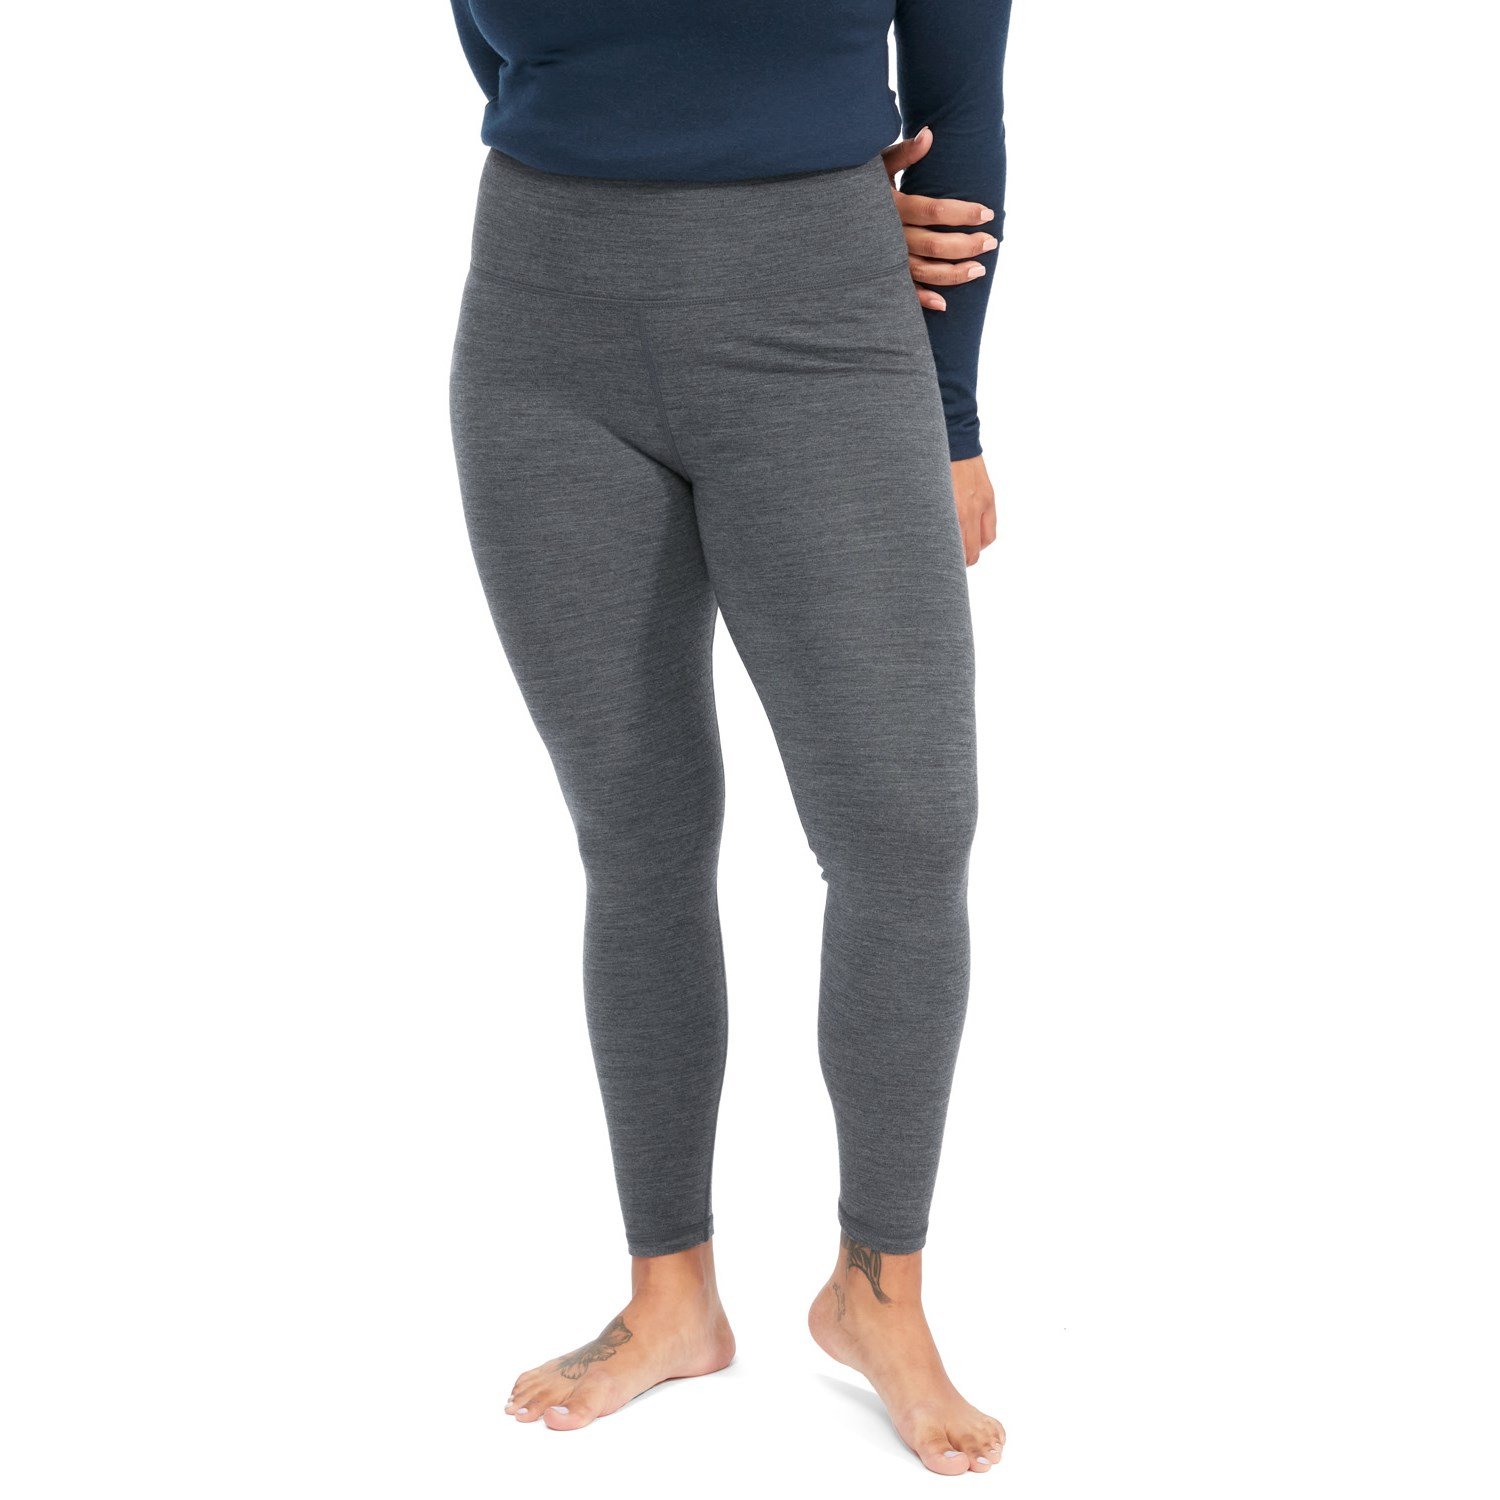 Soft Warm Wicking Merino Wool 7/8th Pocket Legging - Charcoal Grey - XS at   Women's Clothing store